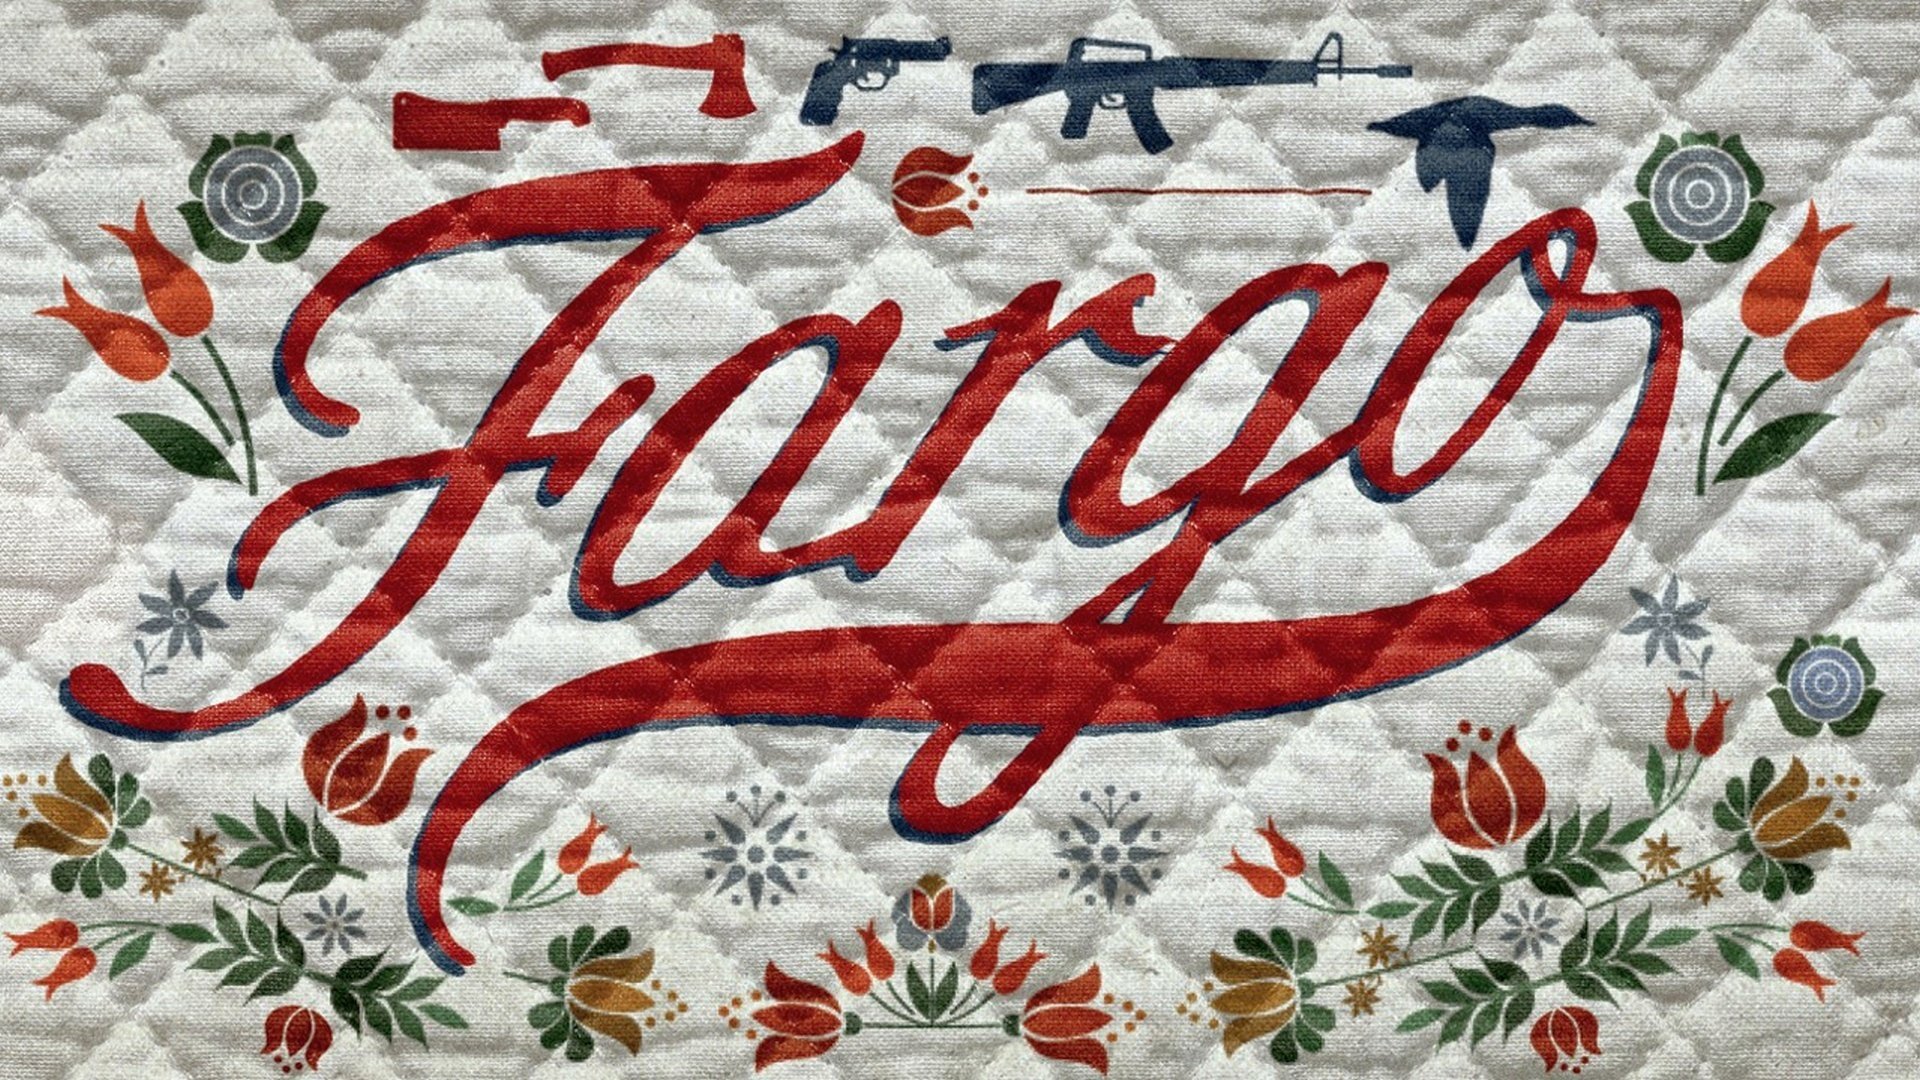 Fargo Wallpapers Hd For Desktop Backgrounds Images, Photos, Reviews